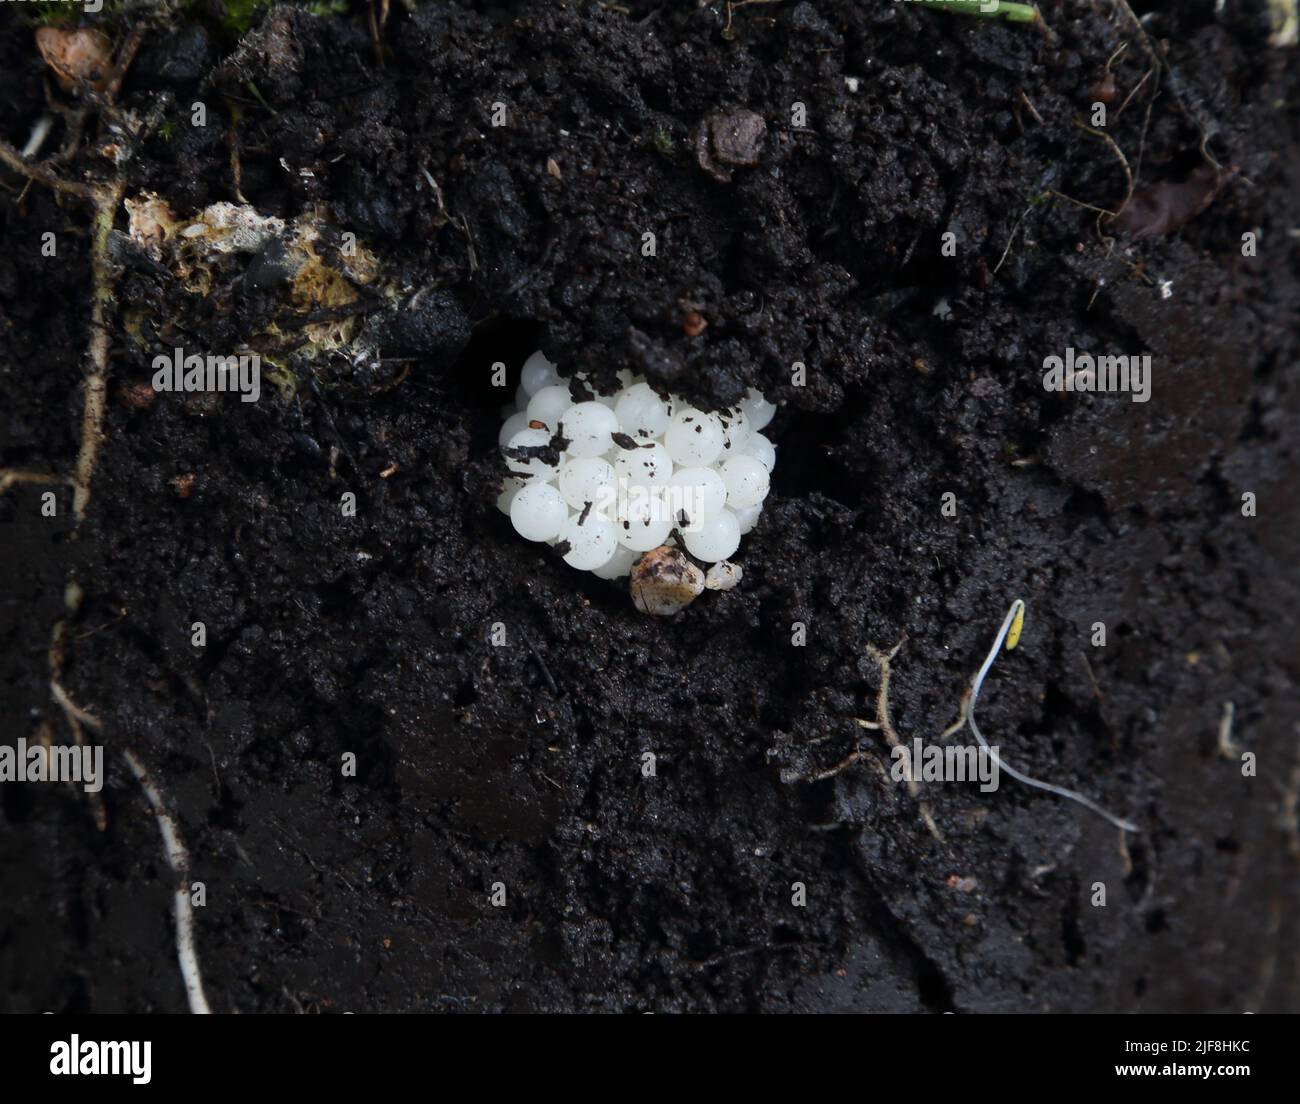 Cornu aspersum or helix aspersa Garden snail eggs laid in Plant pot with Hosta Stock Photo